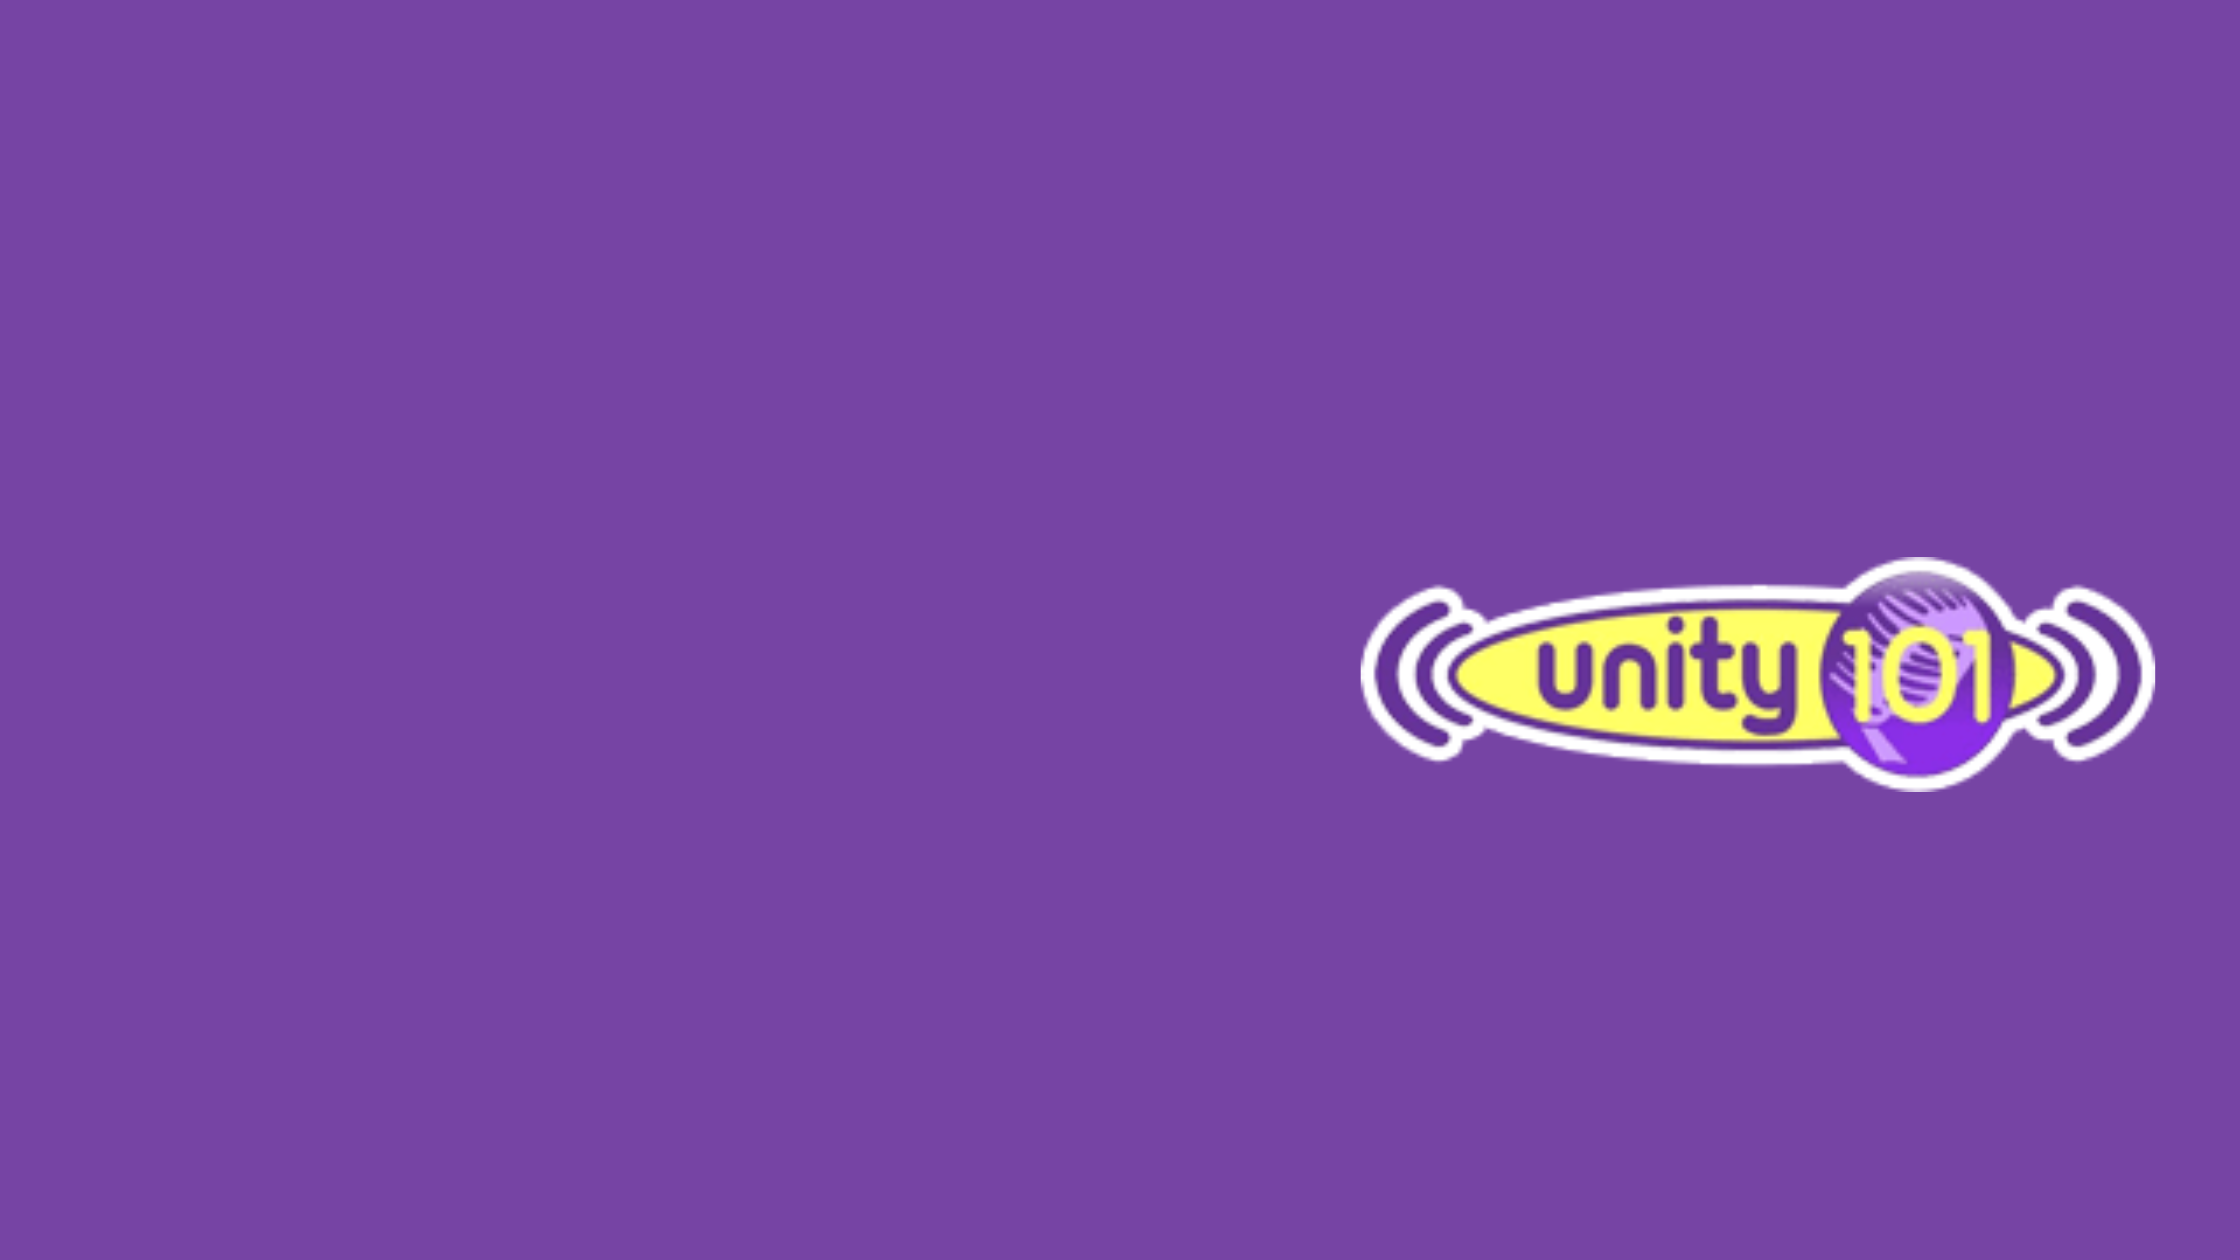 NEW Radio show on Unity 101 – coming soon!